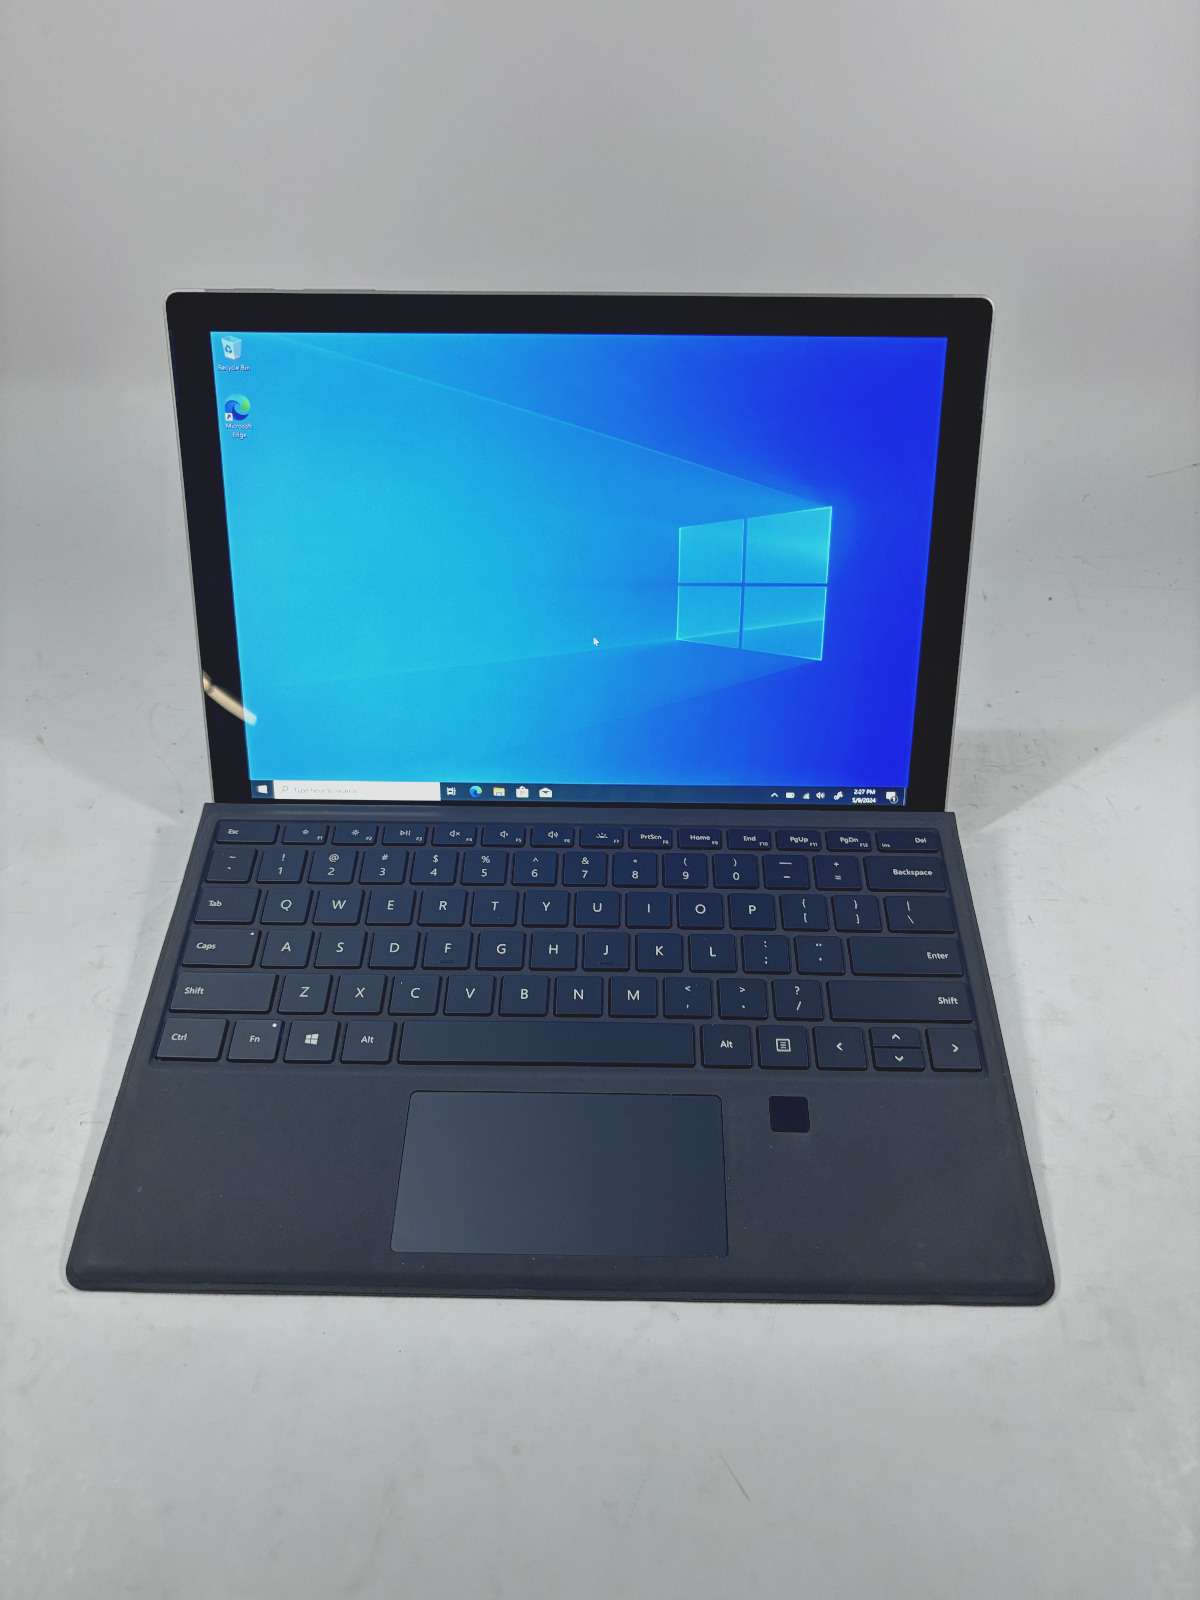 Microsoft Surface Pro (1796) i5 7300U 8GB 256GB SSD Windows10 Pro - Used, Good